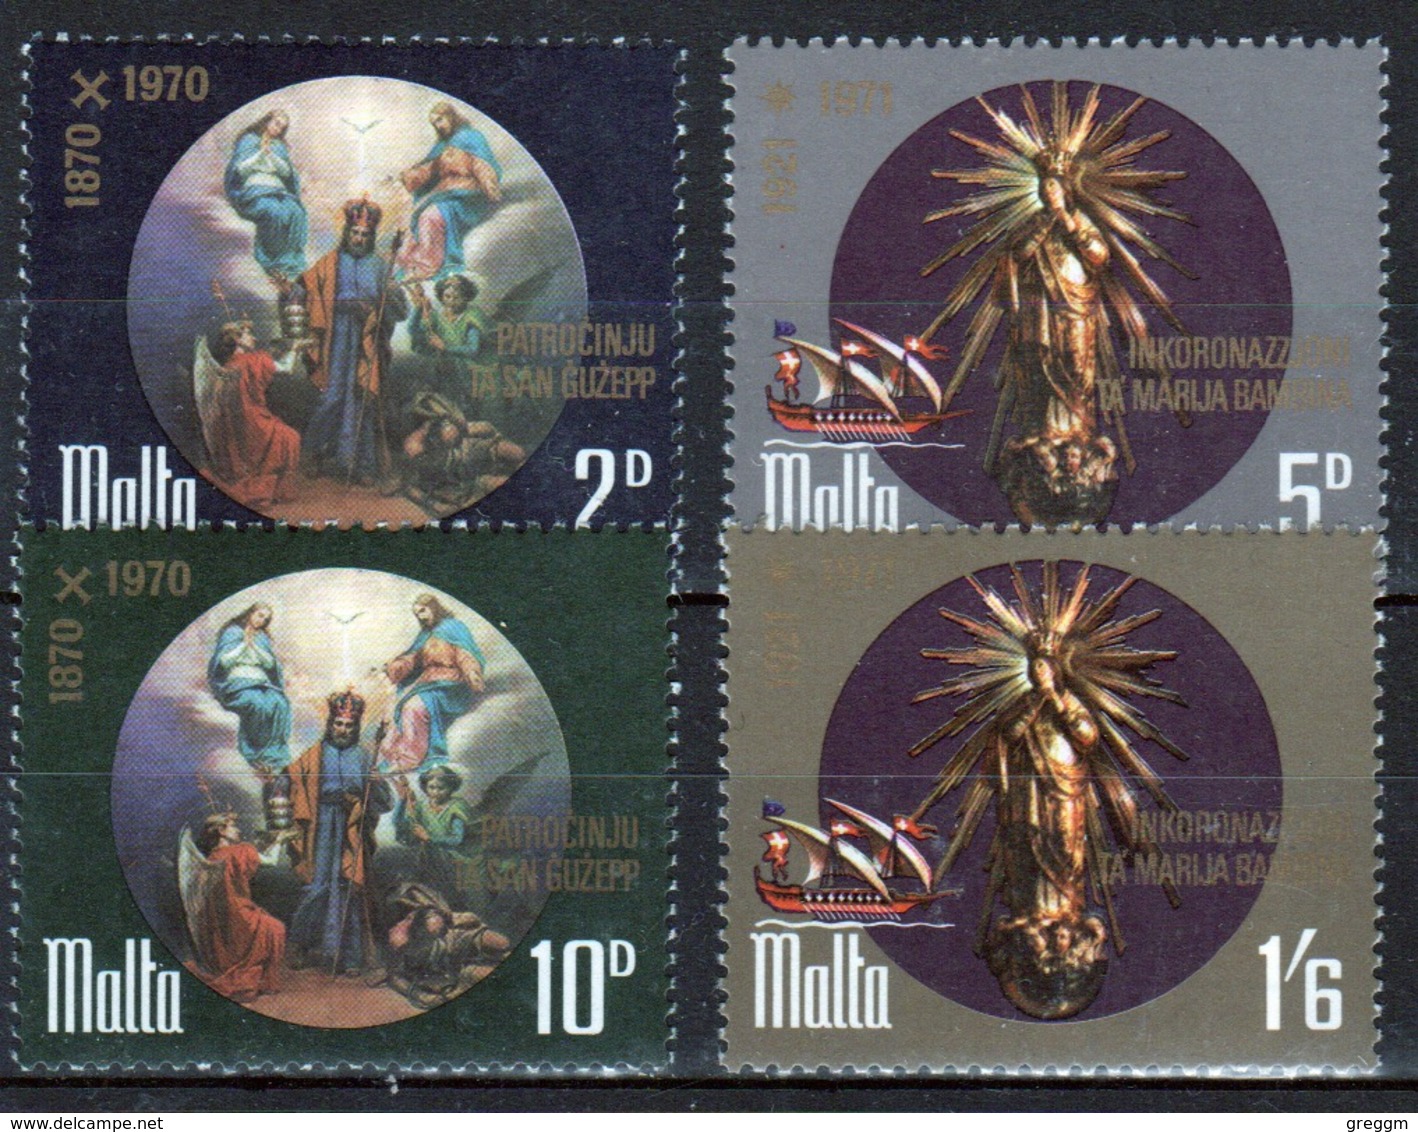 Malta 1971 Complete Set Of Stamps To Celebrate Catholic Church - Malta